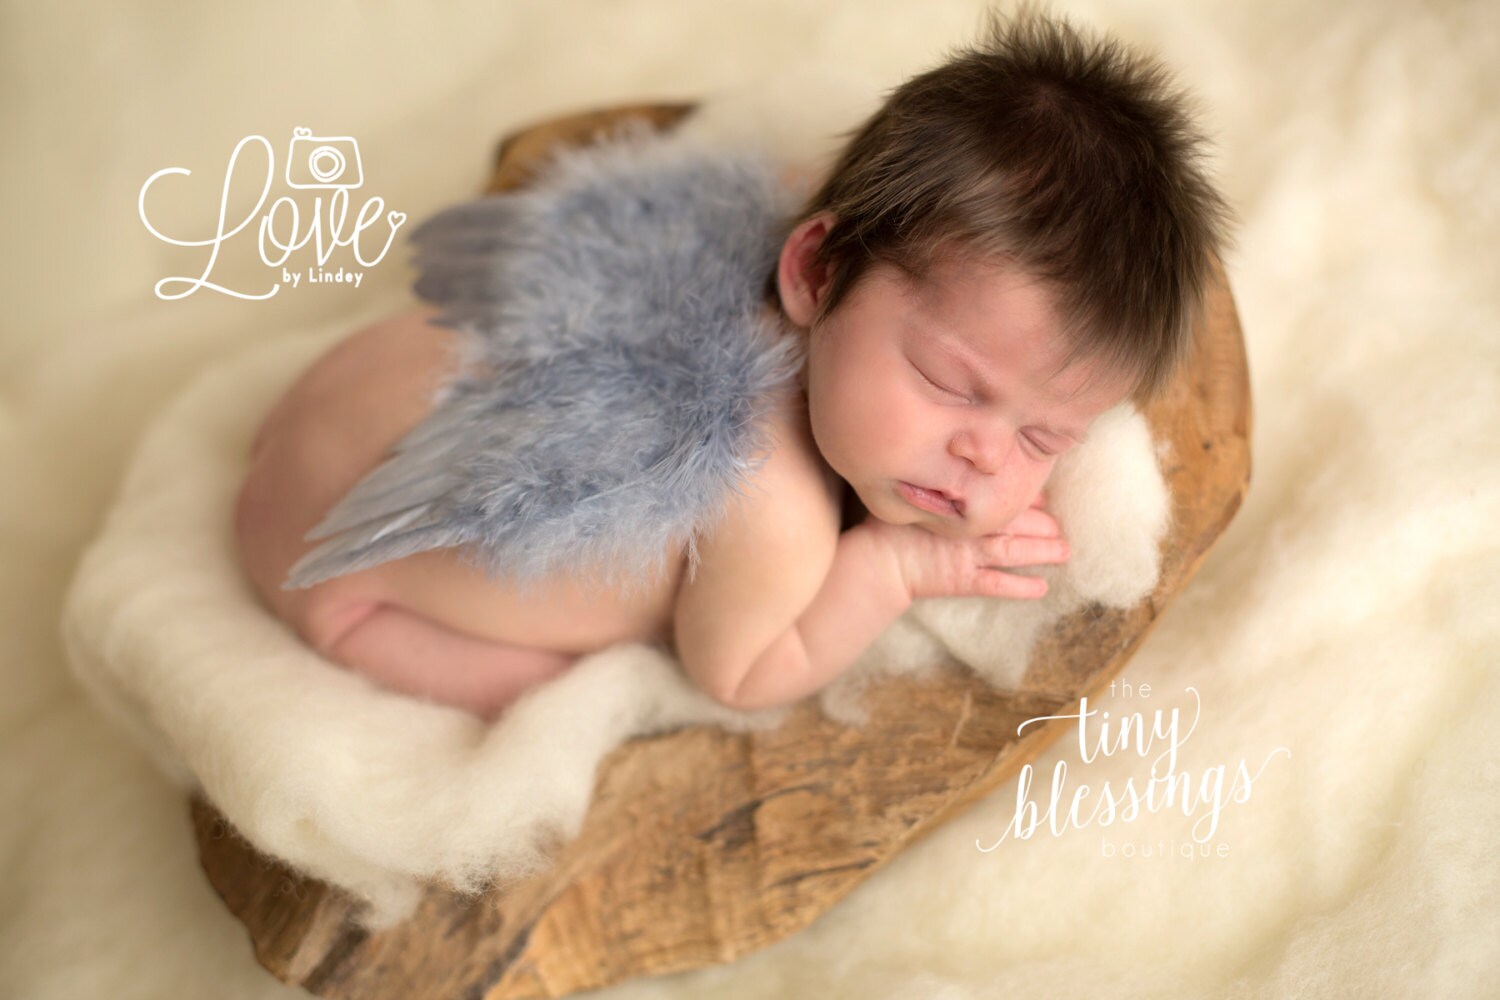 Gray Baby Wings / Baby Angel Wings / Baby Boy Wings / Angel Wings / Newborn Photo Prop / Newborn Wing / Newborn Angel Costume